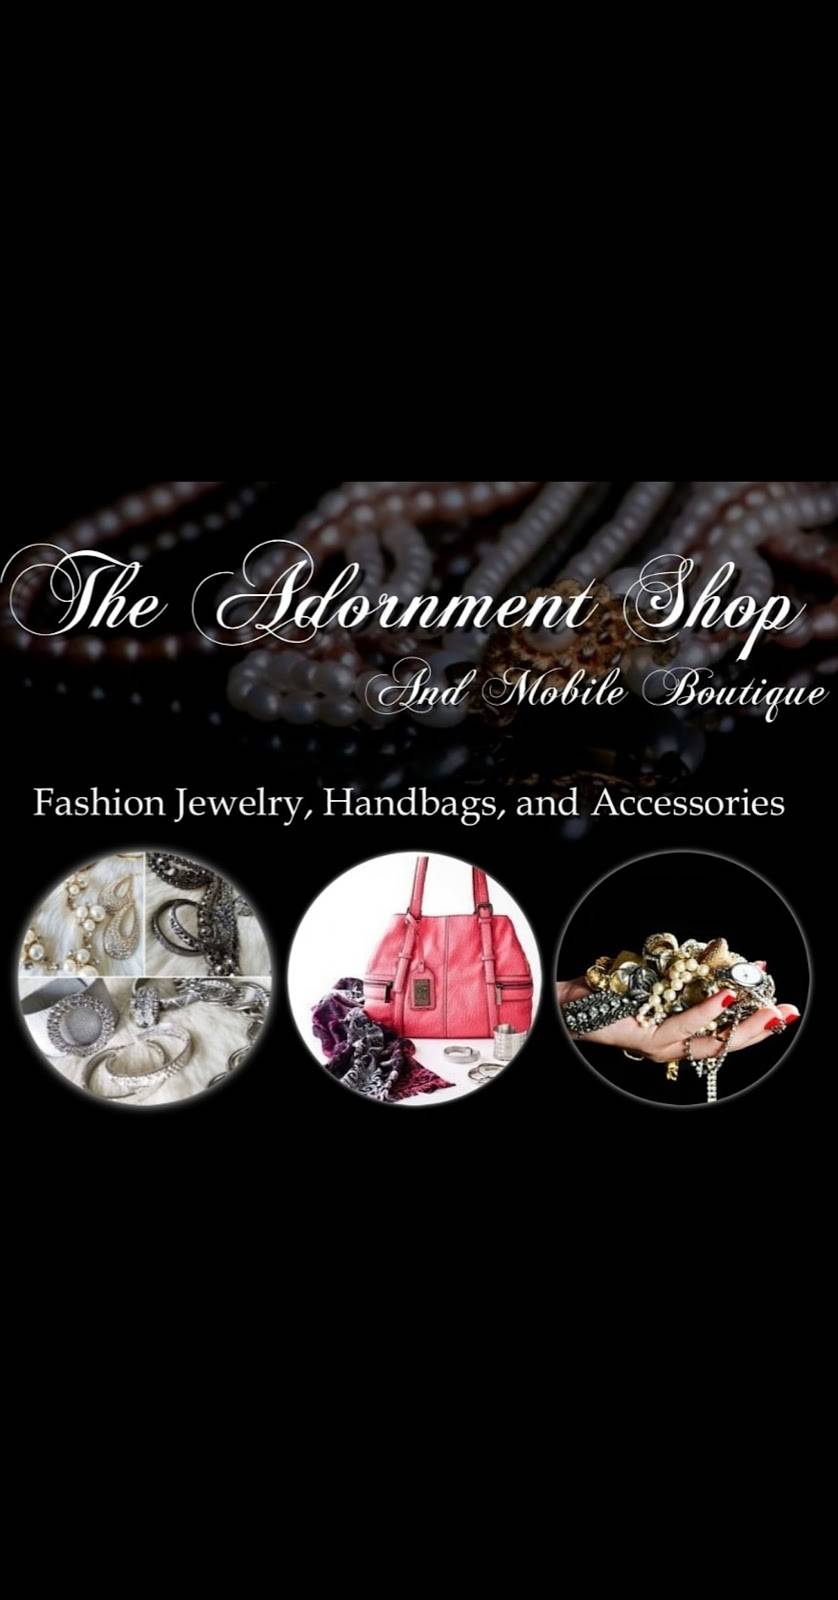 The Adornment Shop | 410 Four Seasons Blvd Inside The Cutting Edge Shoppes at Four Seasons SP226 Suite 402, Greensboro, NC 27407, USA | Phone: (336) 505-7170